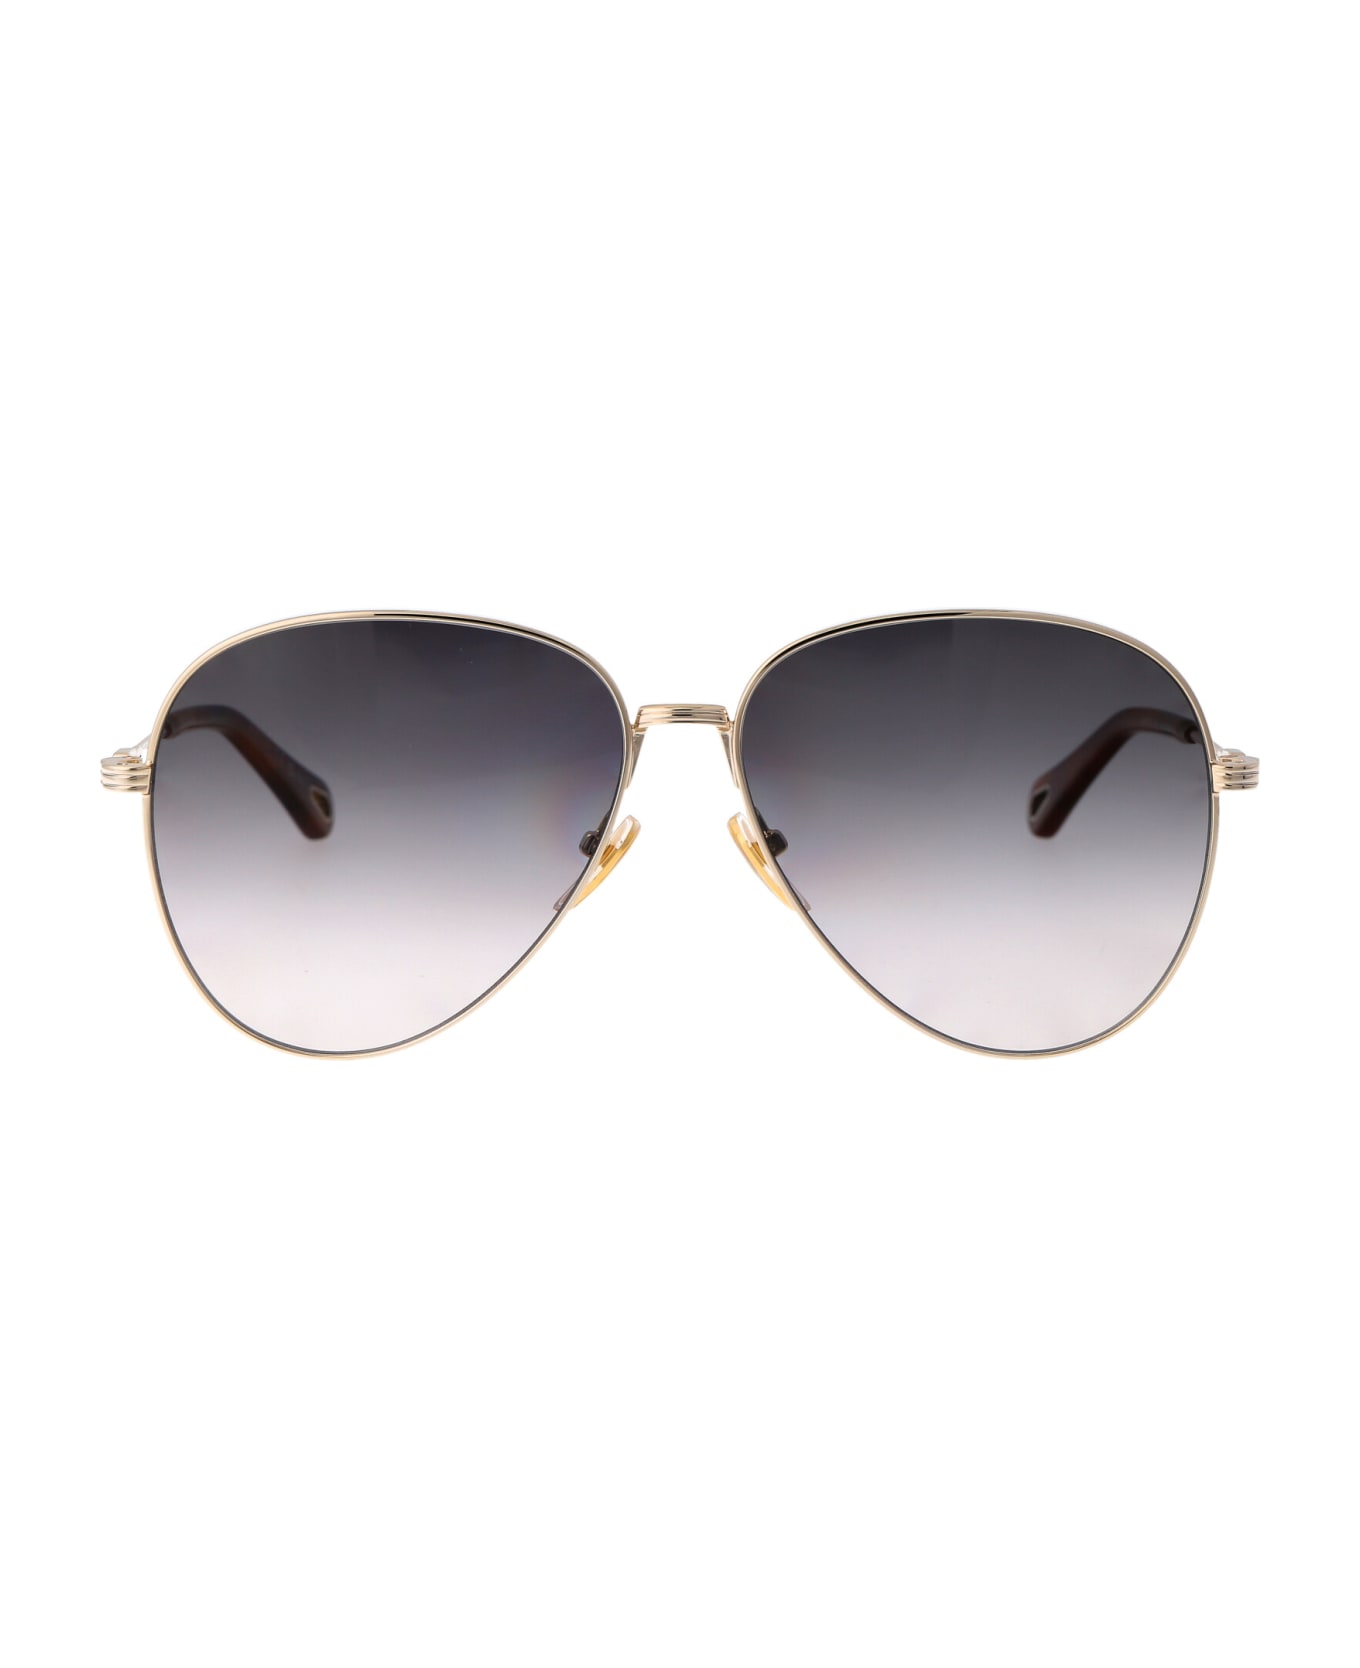 Chloé Eyewear Ch0177s Sunglasses - 001 GOLD GOLD GREY